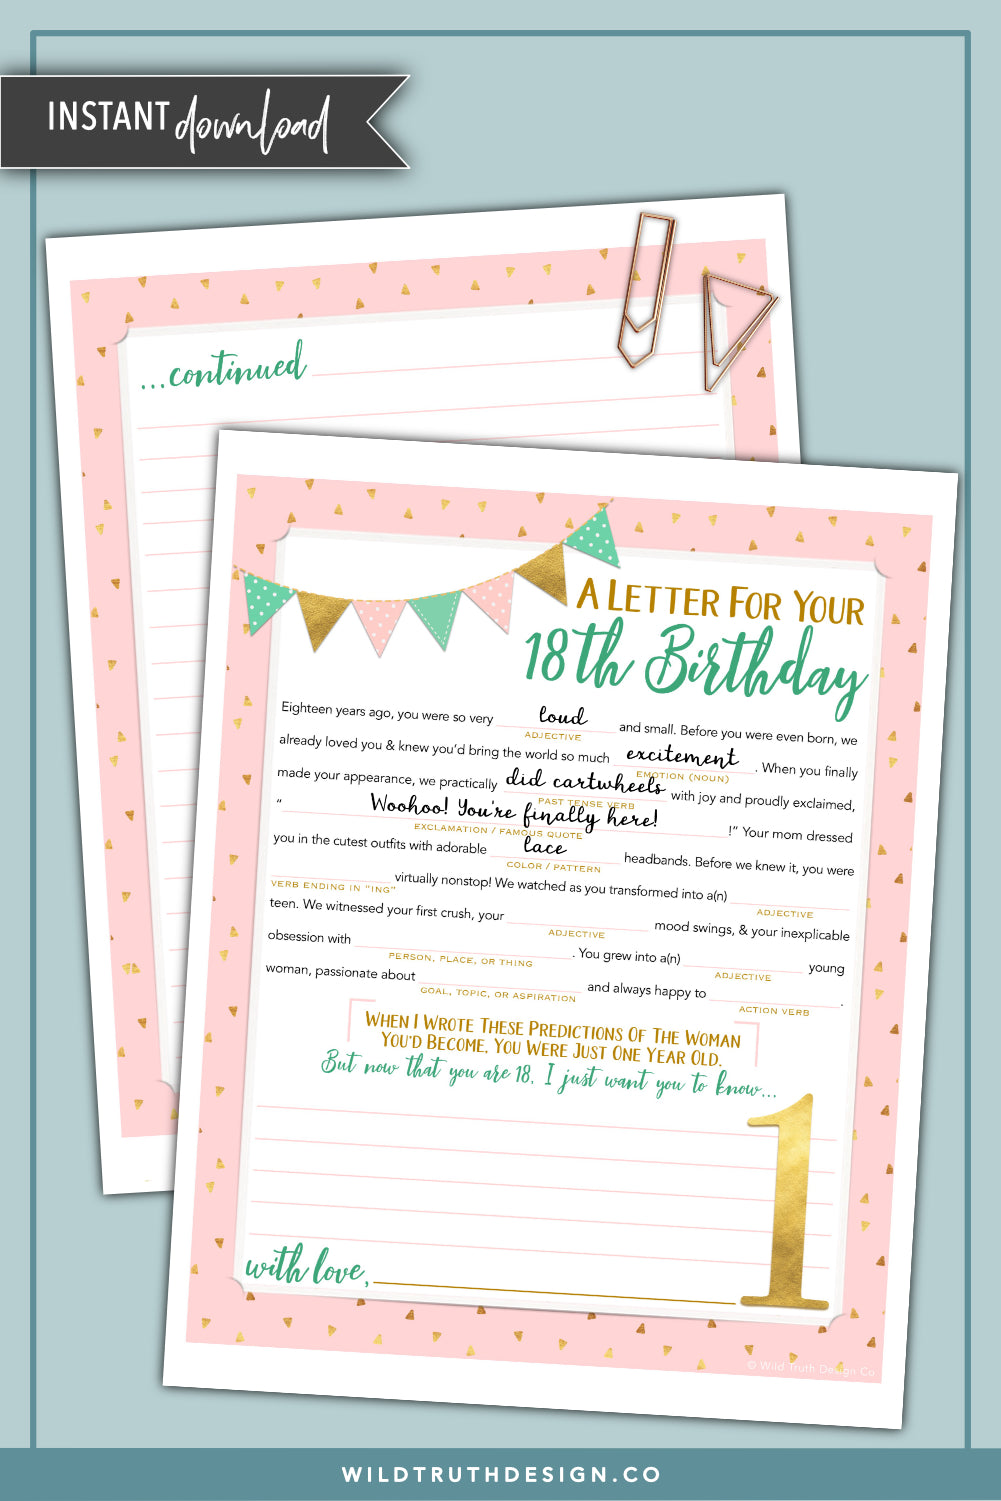 free-printable-1st-birthday-time-capsule-letter-free-printable-templates